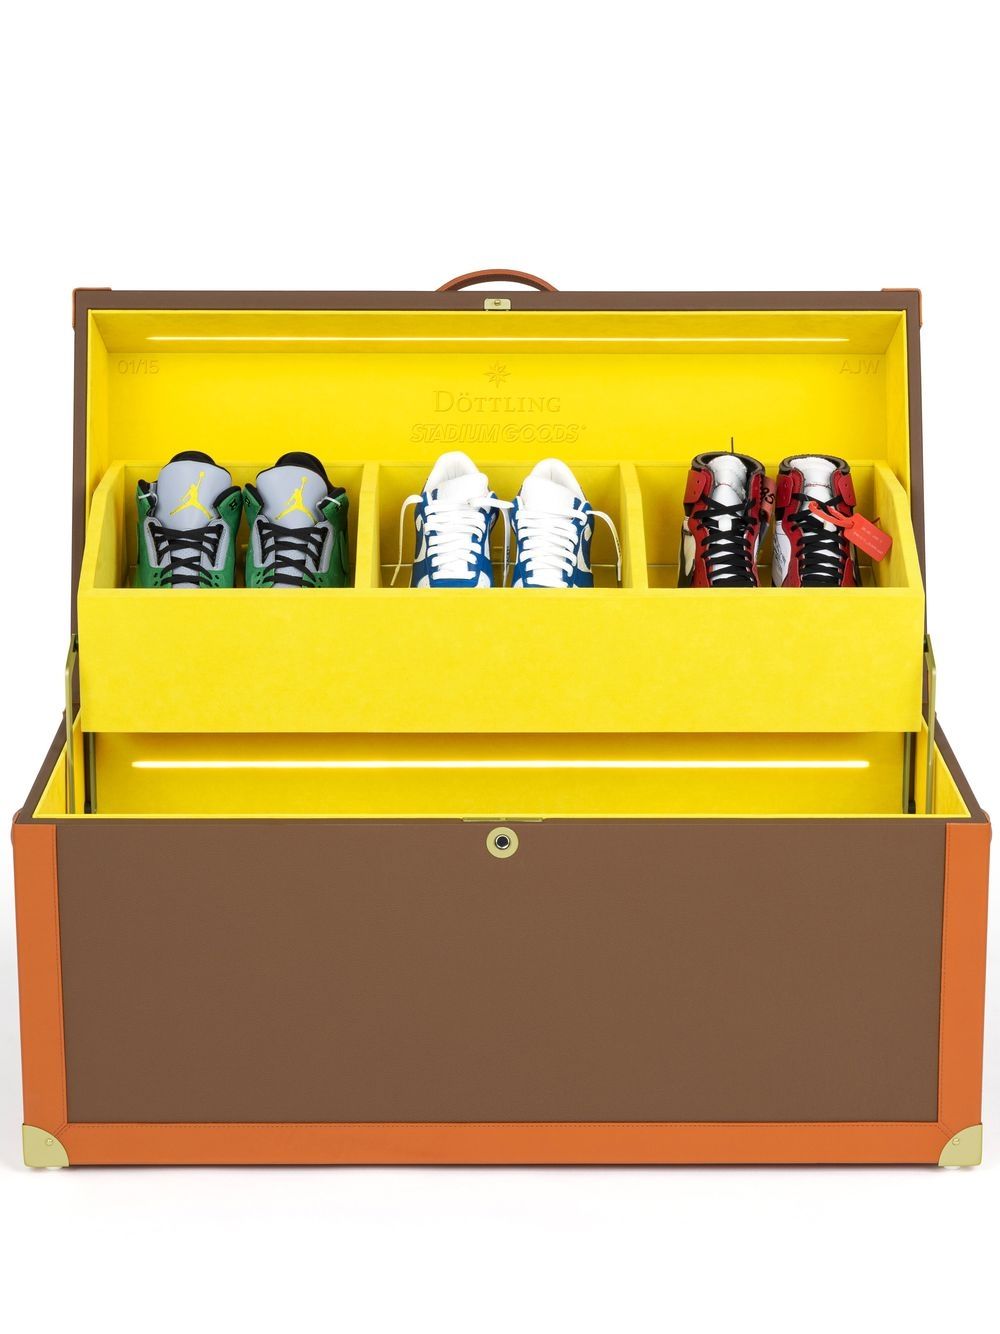 farfetch-sneaker-safes-cases-stadium-goods (11)